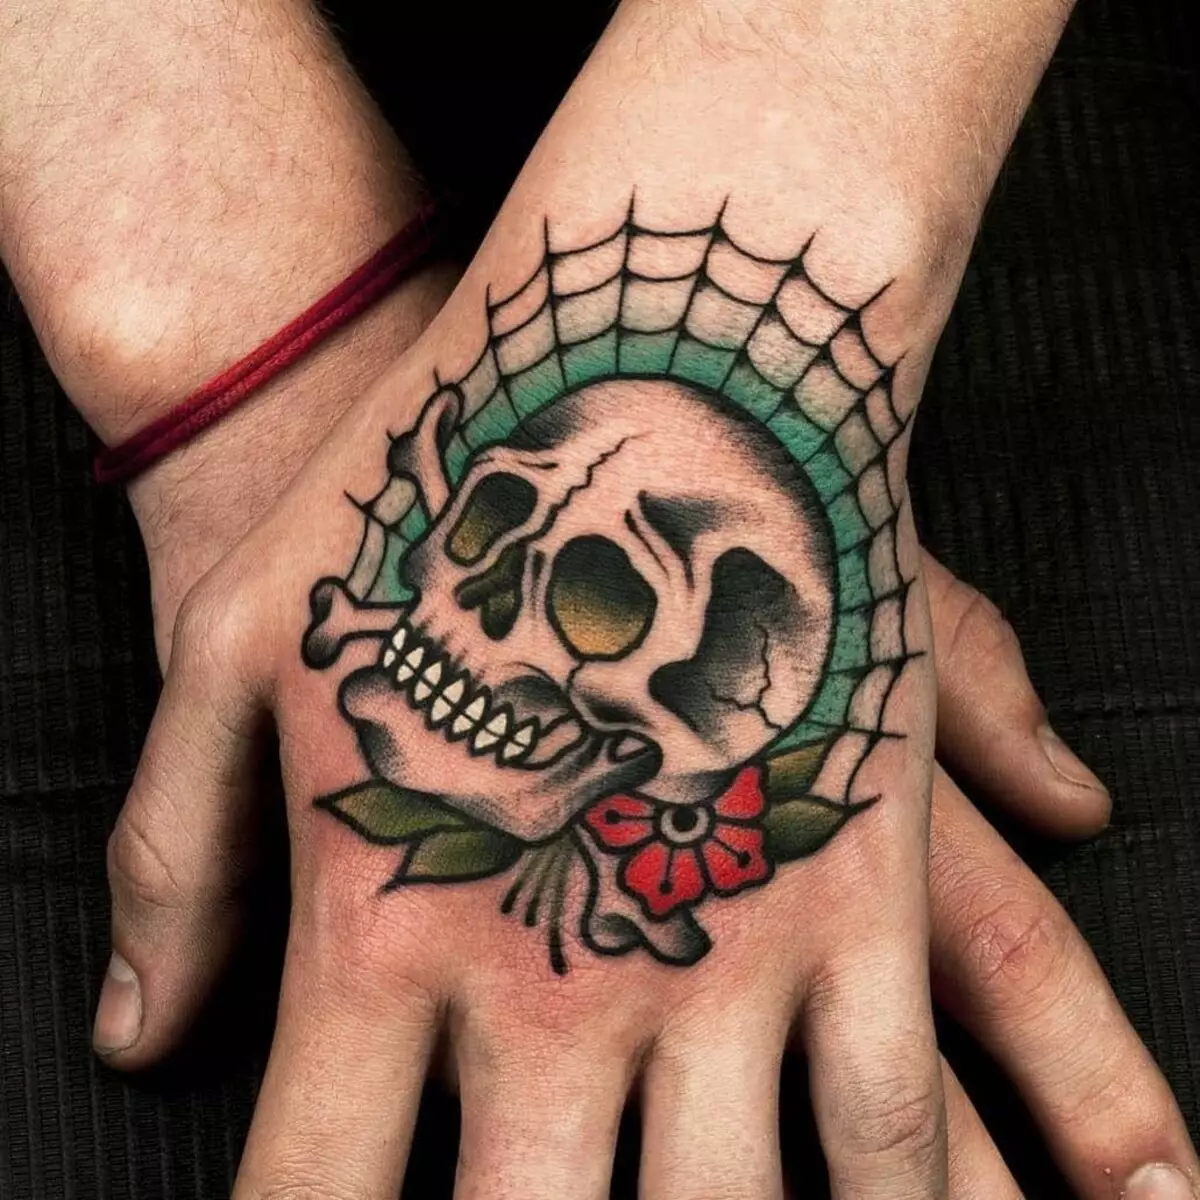 Old Skyl tattoo: lakaran tatu, lengan hitam dan putih dan sedikit menelan, jantung dan panther, ular dan lain-lain imej tatu untuk payudara, bahu dan kaki 14139_24